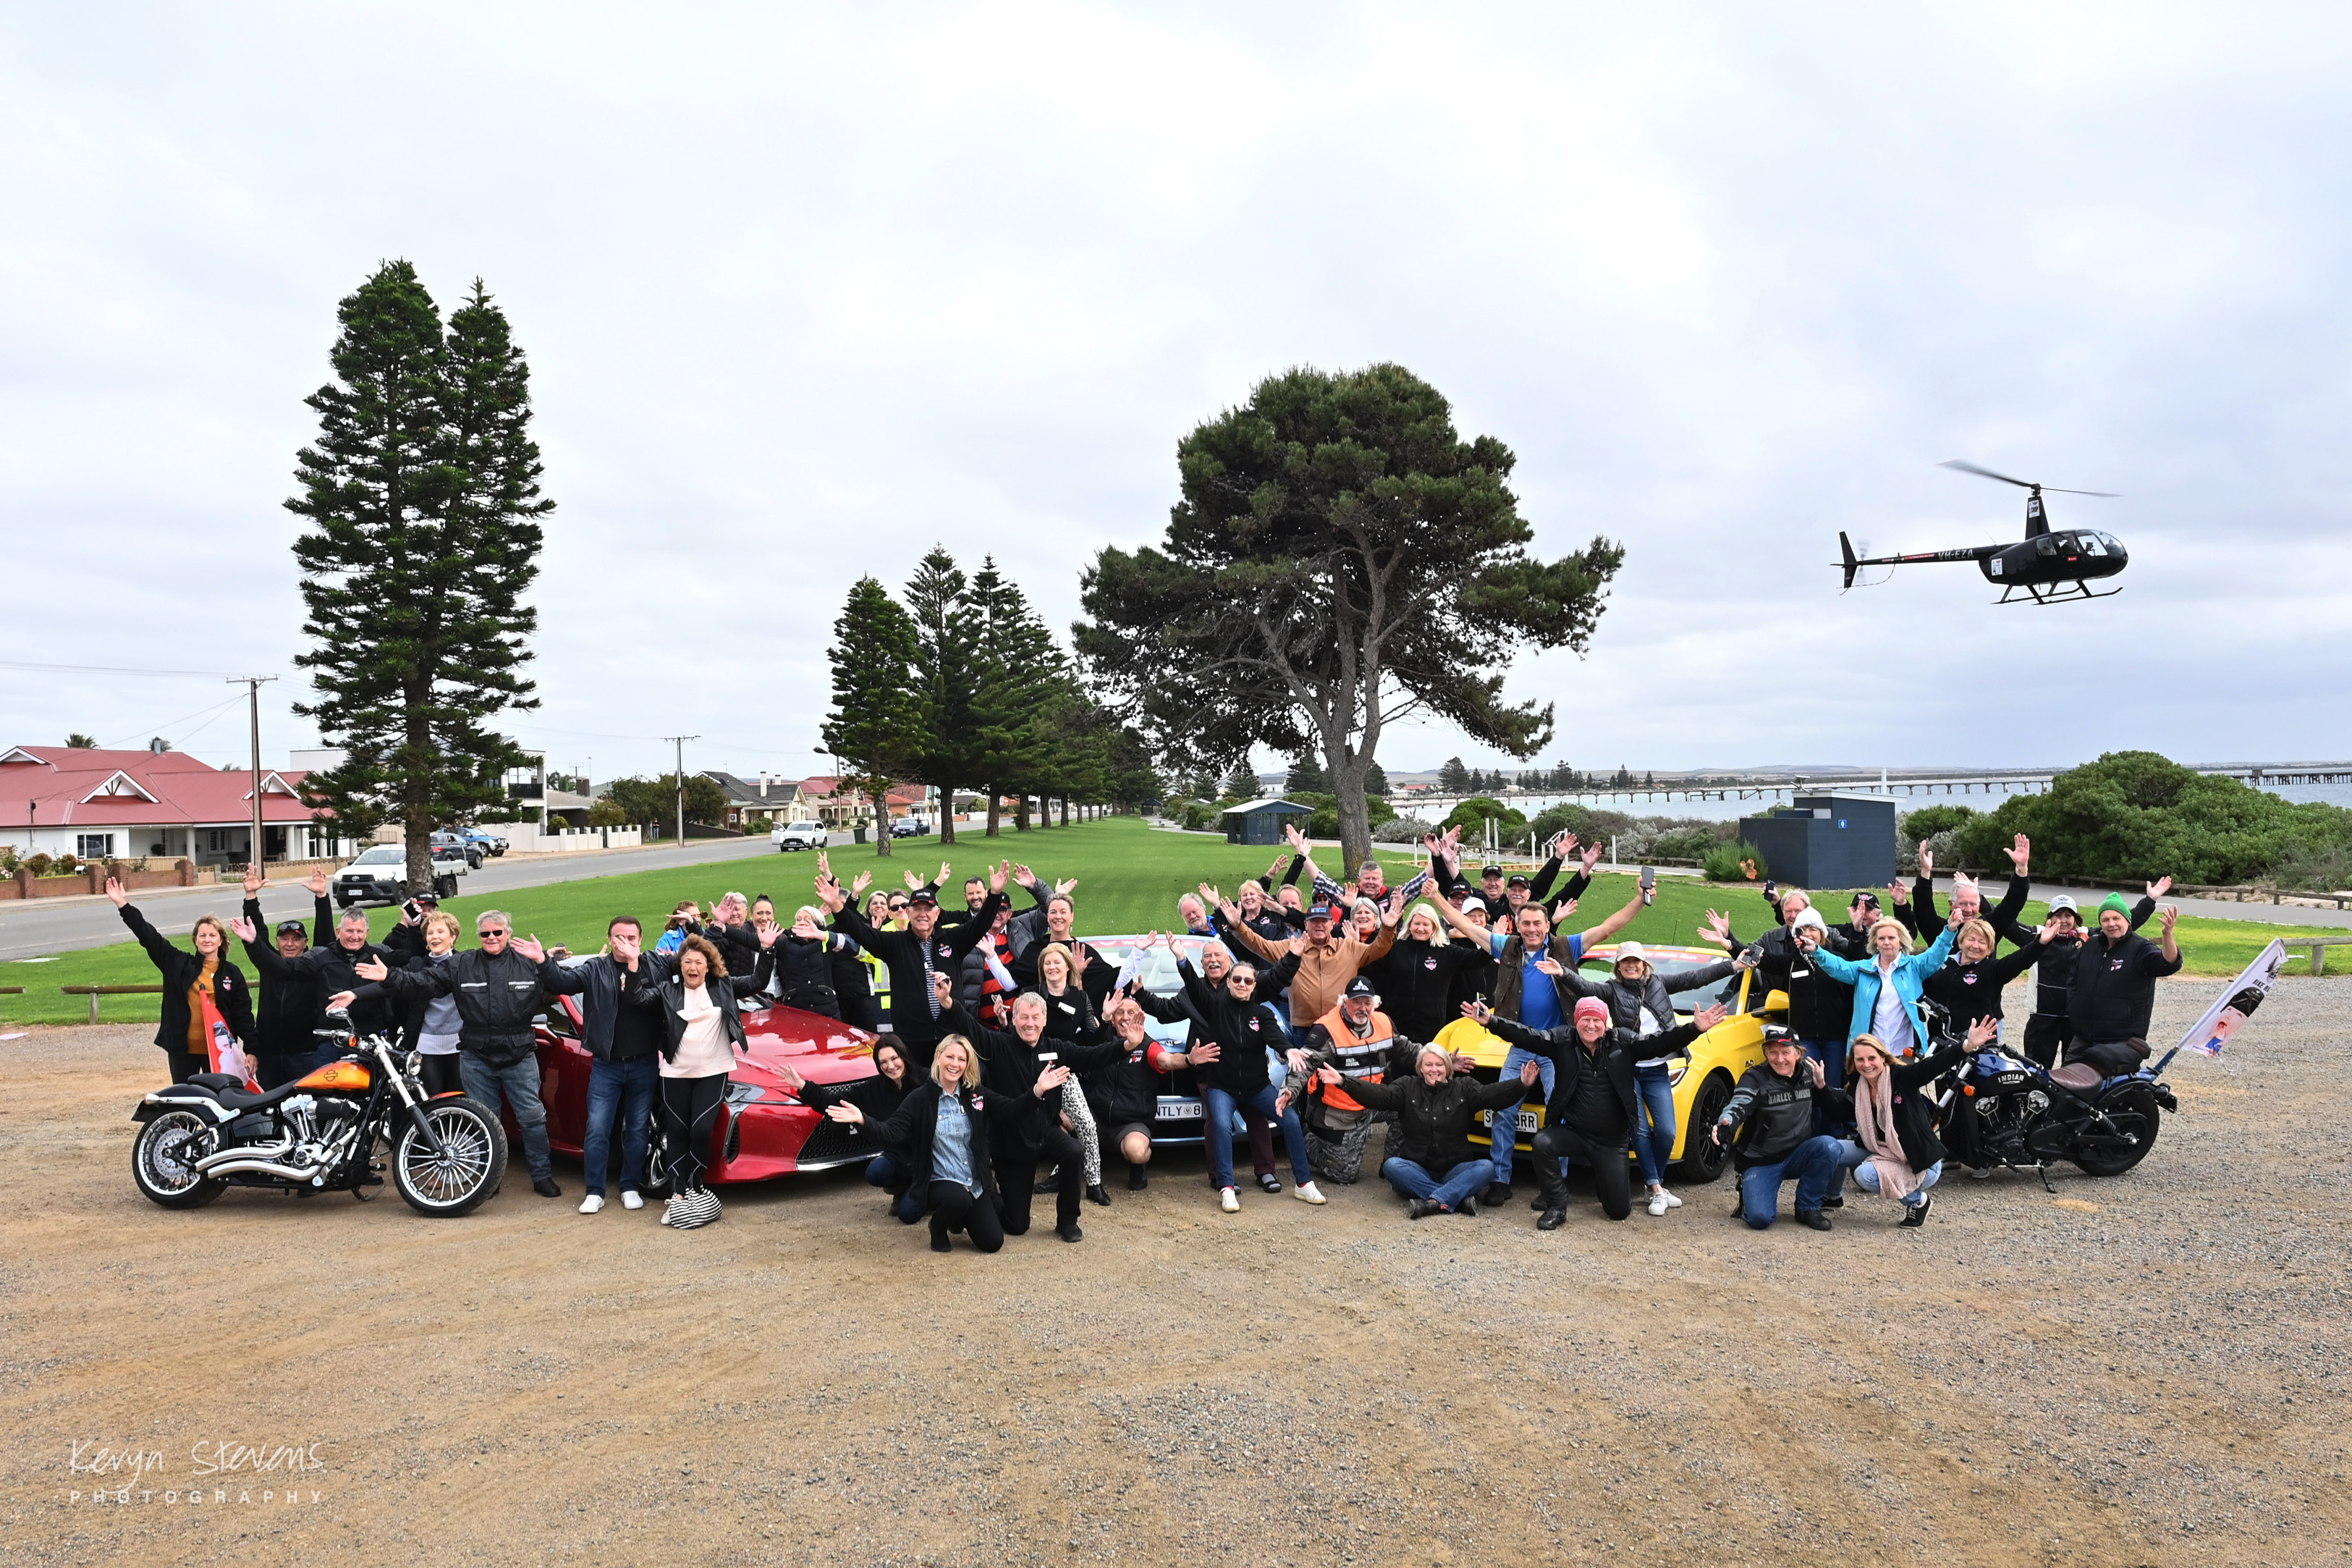 Variety Moto Run 2020 sets a new fundraising record!